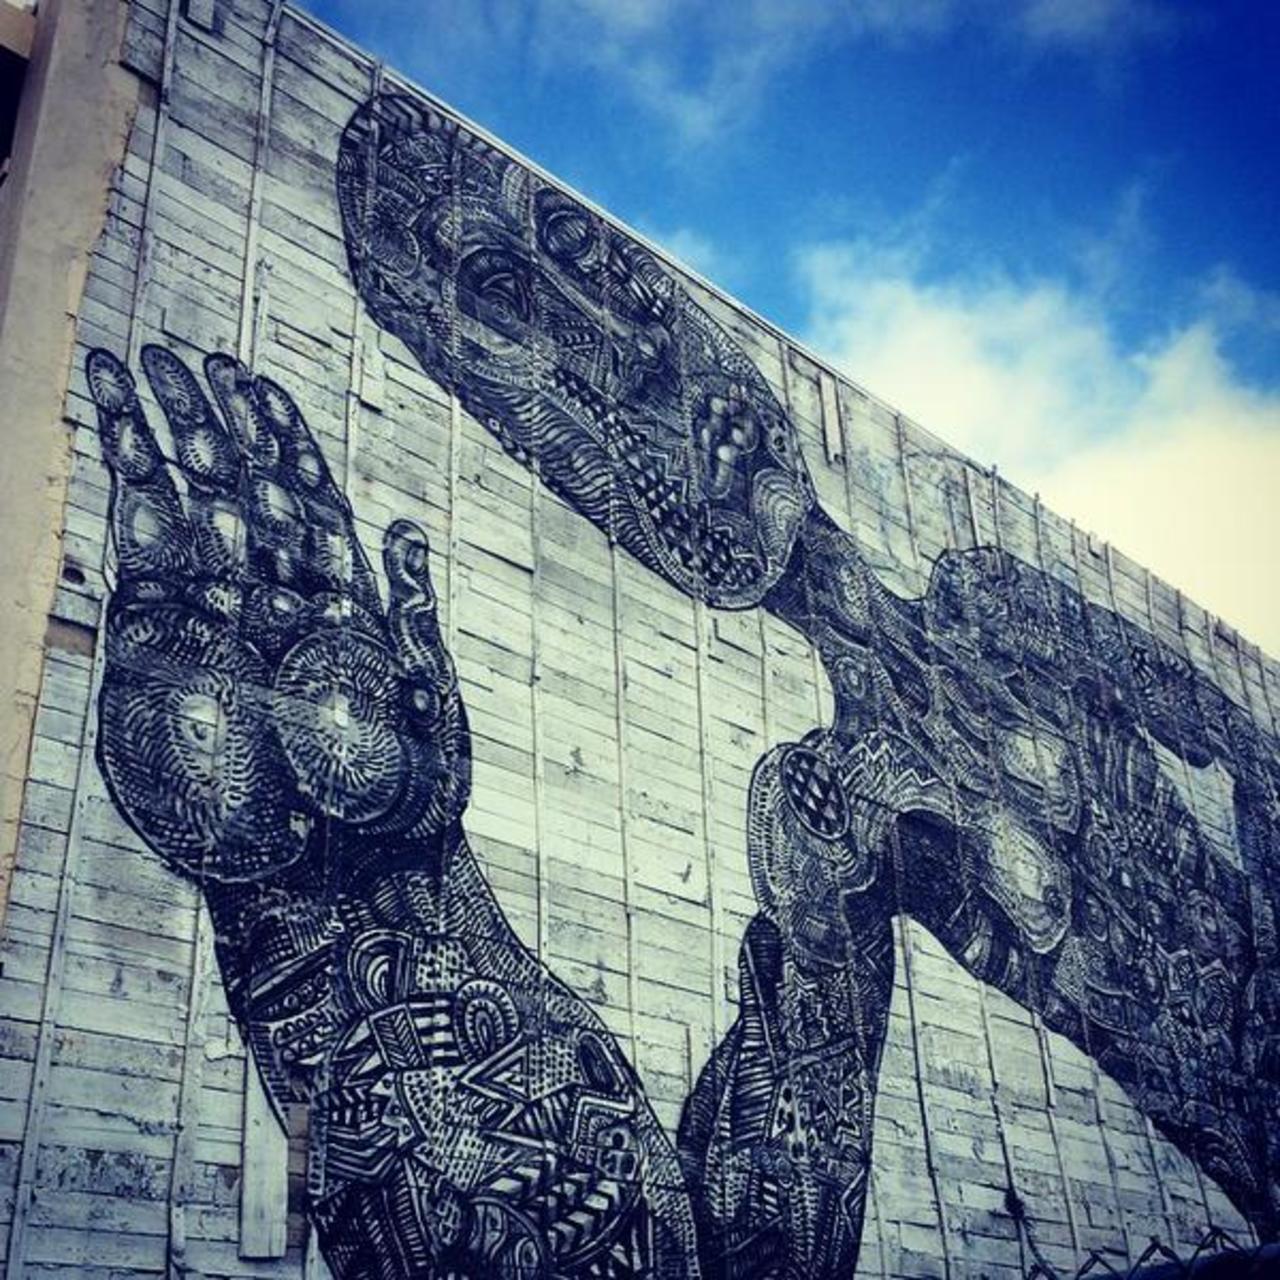 RT @FCuypers: #StreetArt via @AlmostT_Blog SAN FRANCISCO
Gorgeous work via @circumjacent  #graffiti  http://t.co/PNaIBH3O7e” http://ow.ly/NGoYV